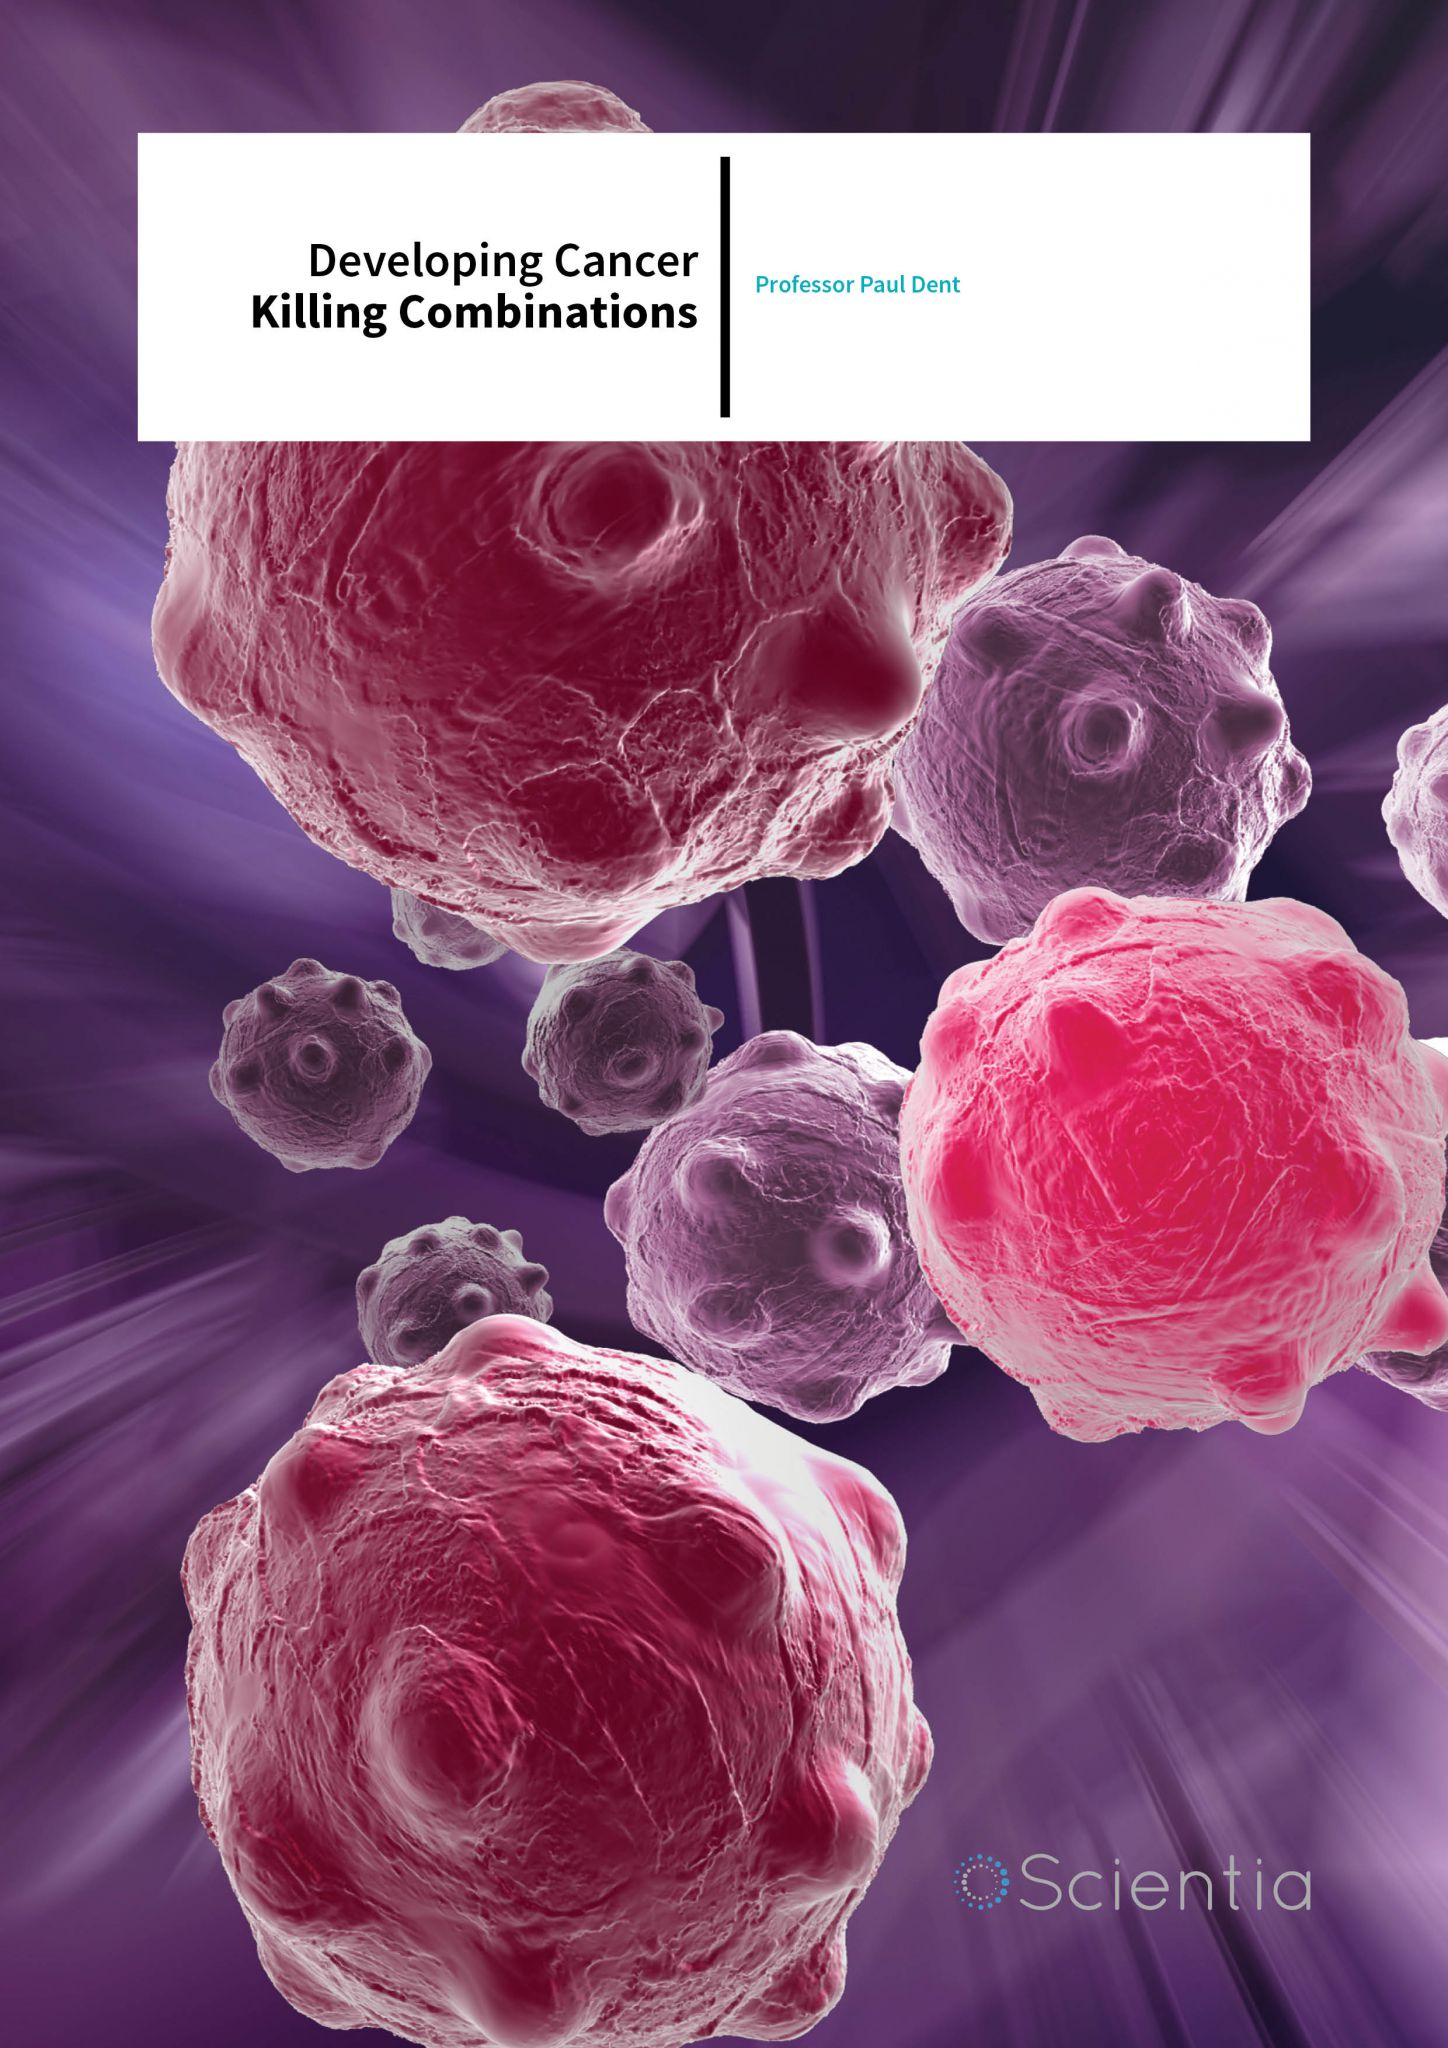 Professor Paul Dent – Developing Cancer Killing Combinations